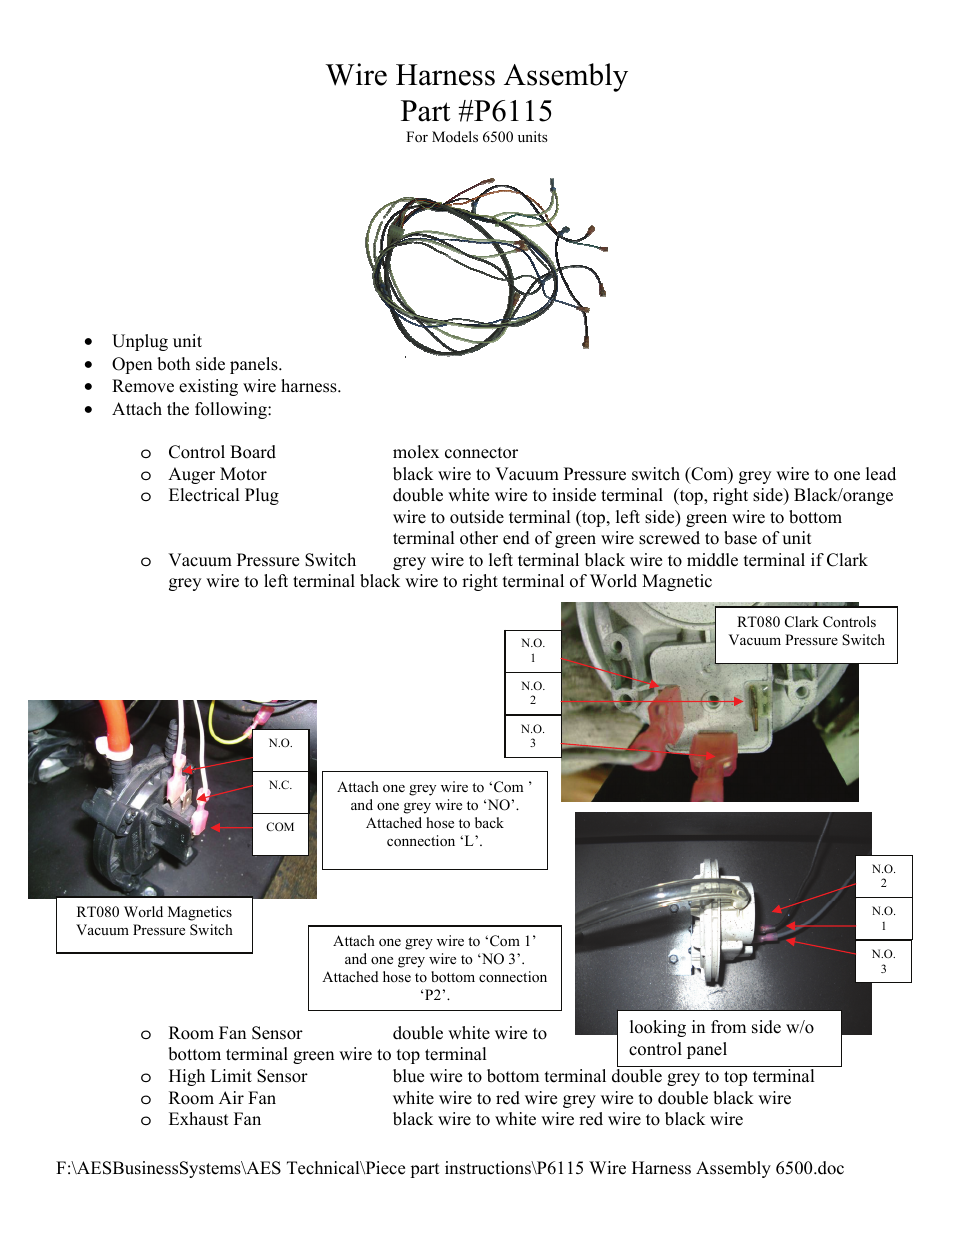 P6115 Wire Harness